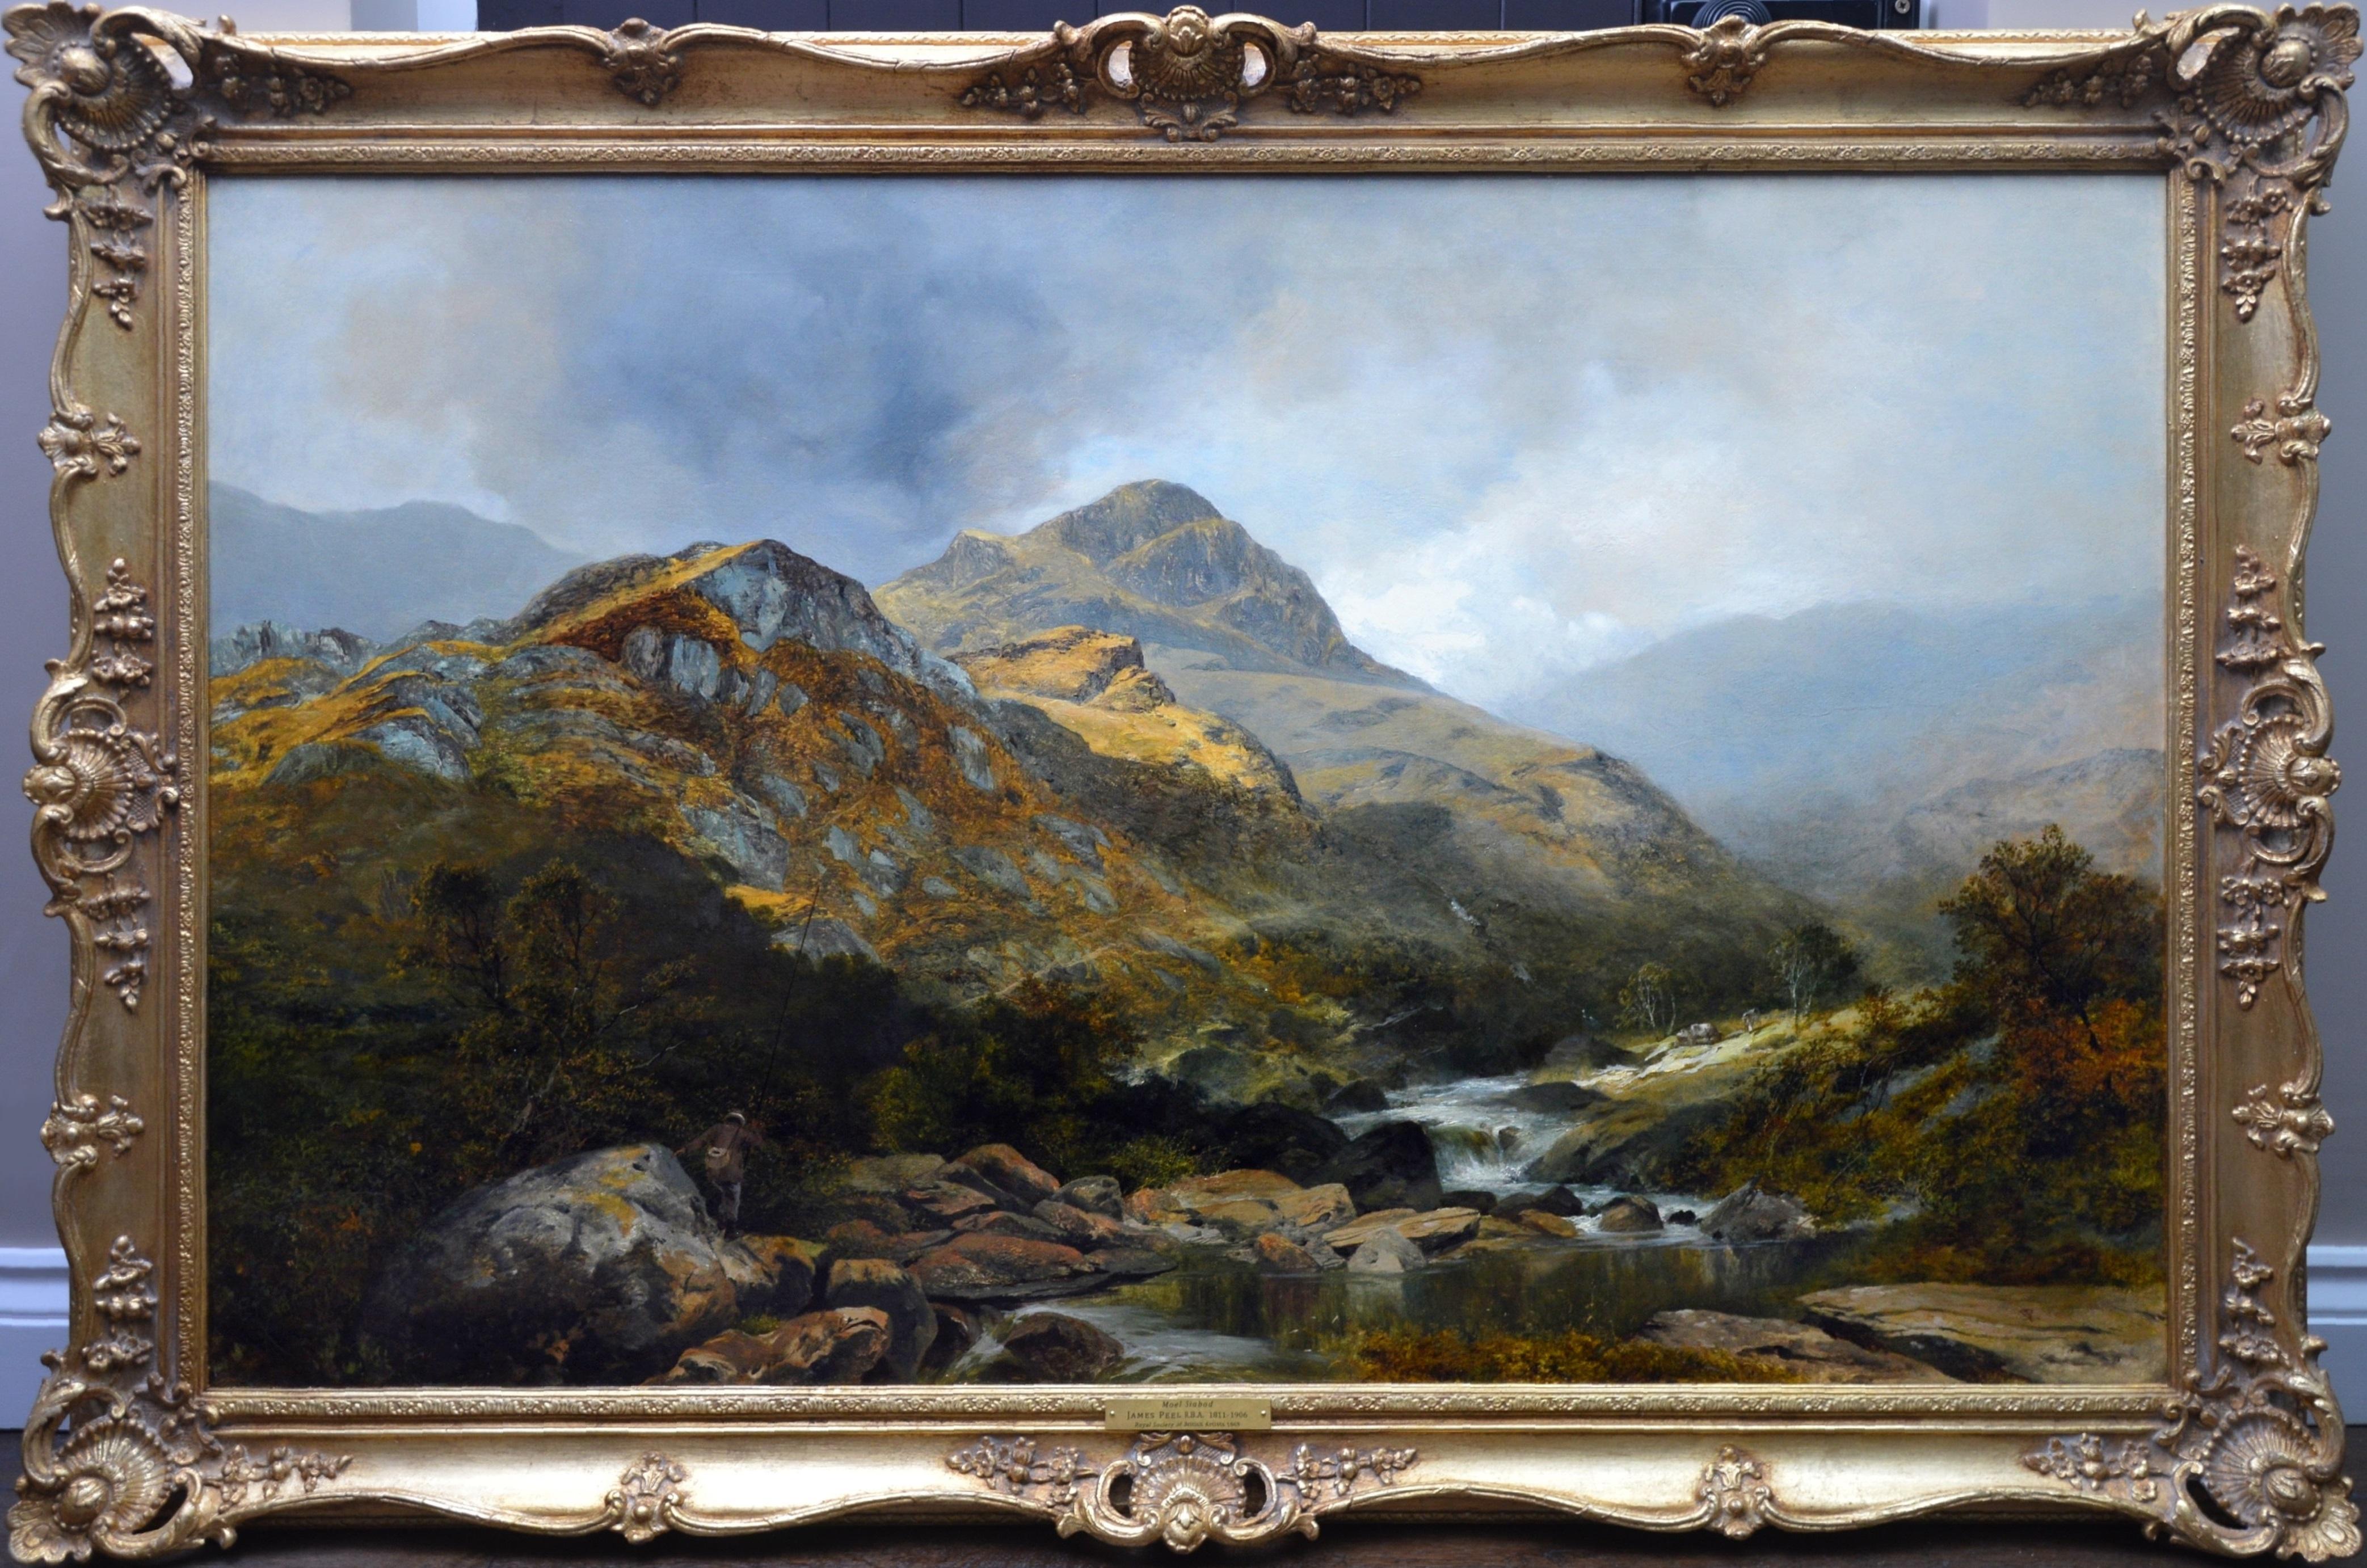 James Peel RBA Landscape Painting - Moel Siabod - Very Large 19th Century Welsh Landscape Exhibition Oil Painting